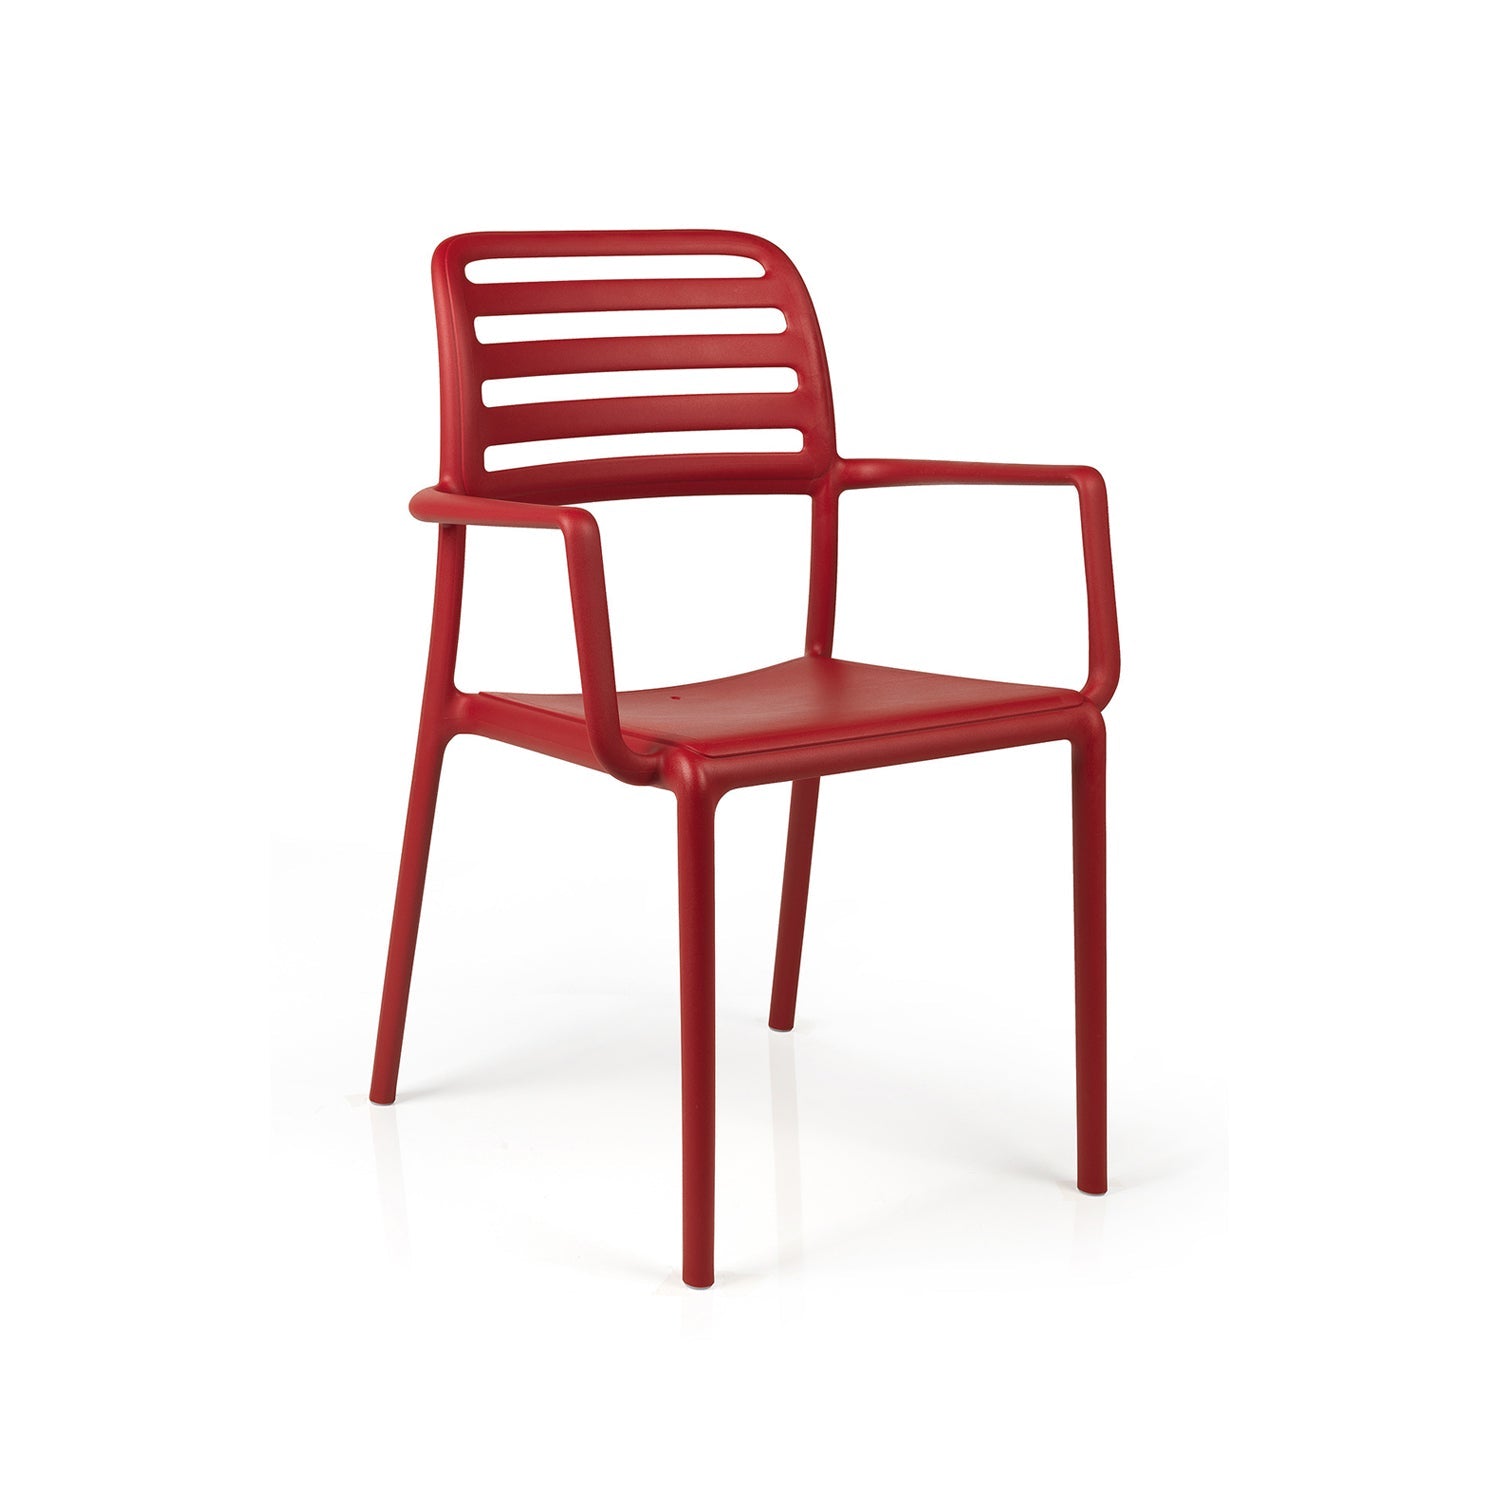 Costa Garden Chair By Nardi - Red